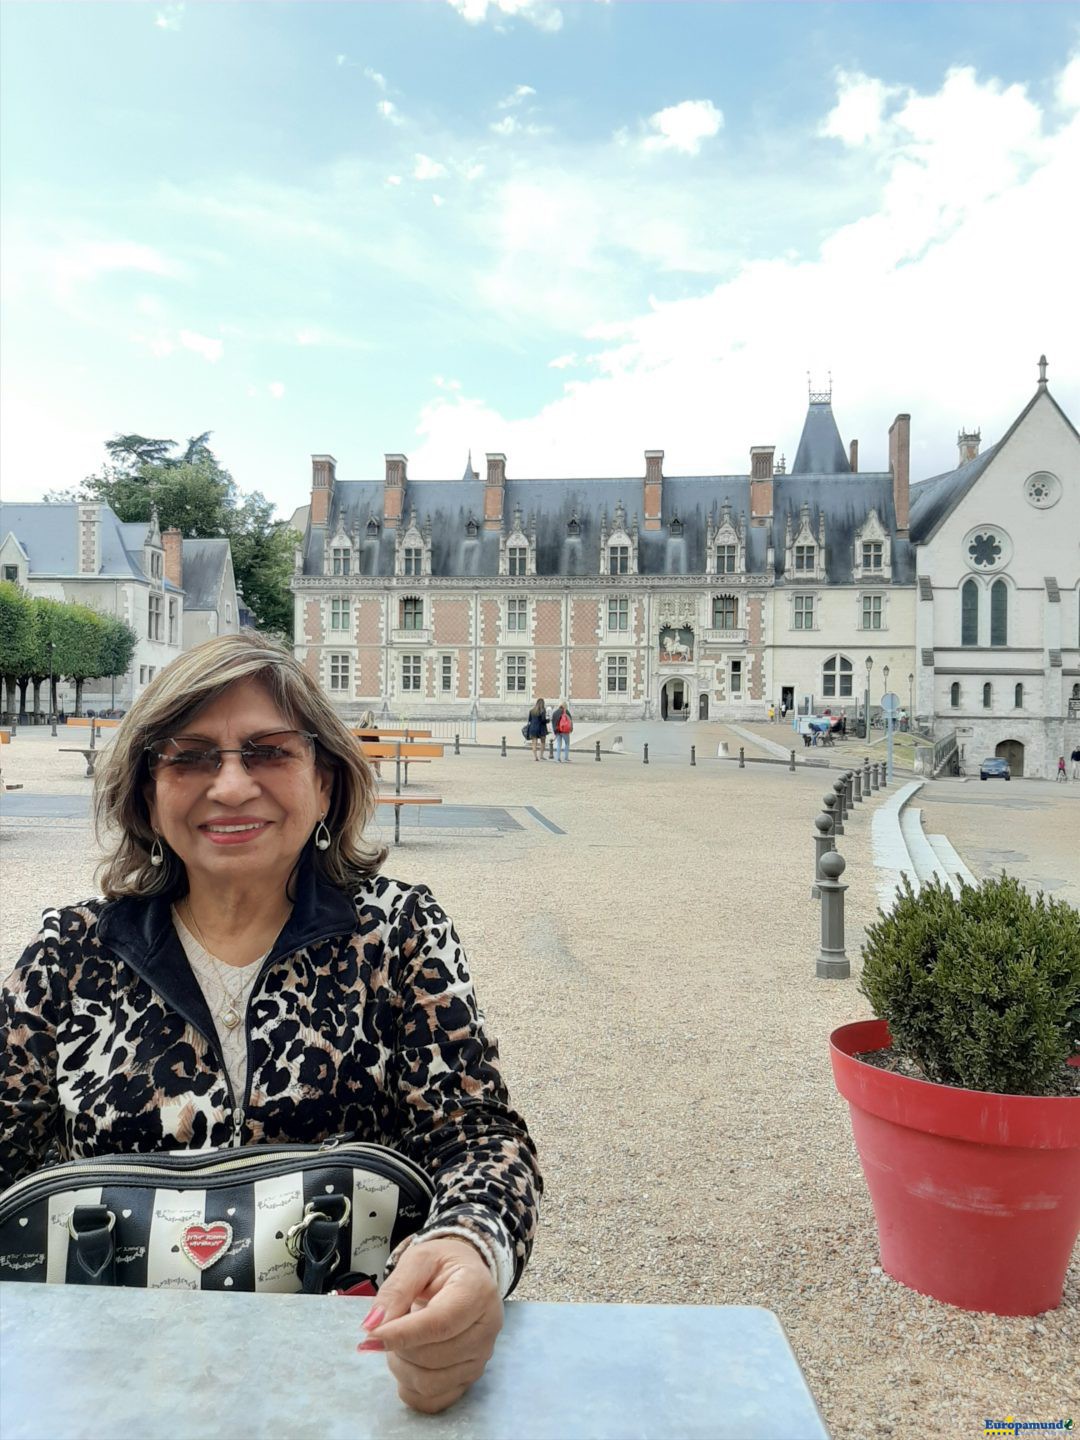 El Castillo de Blois